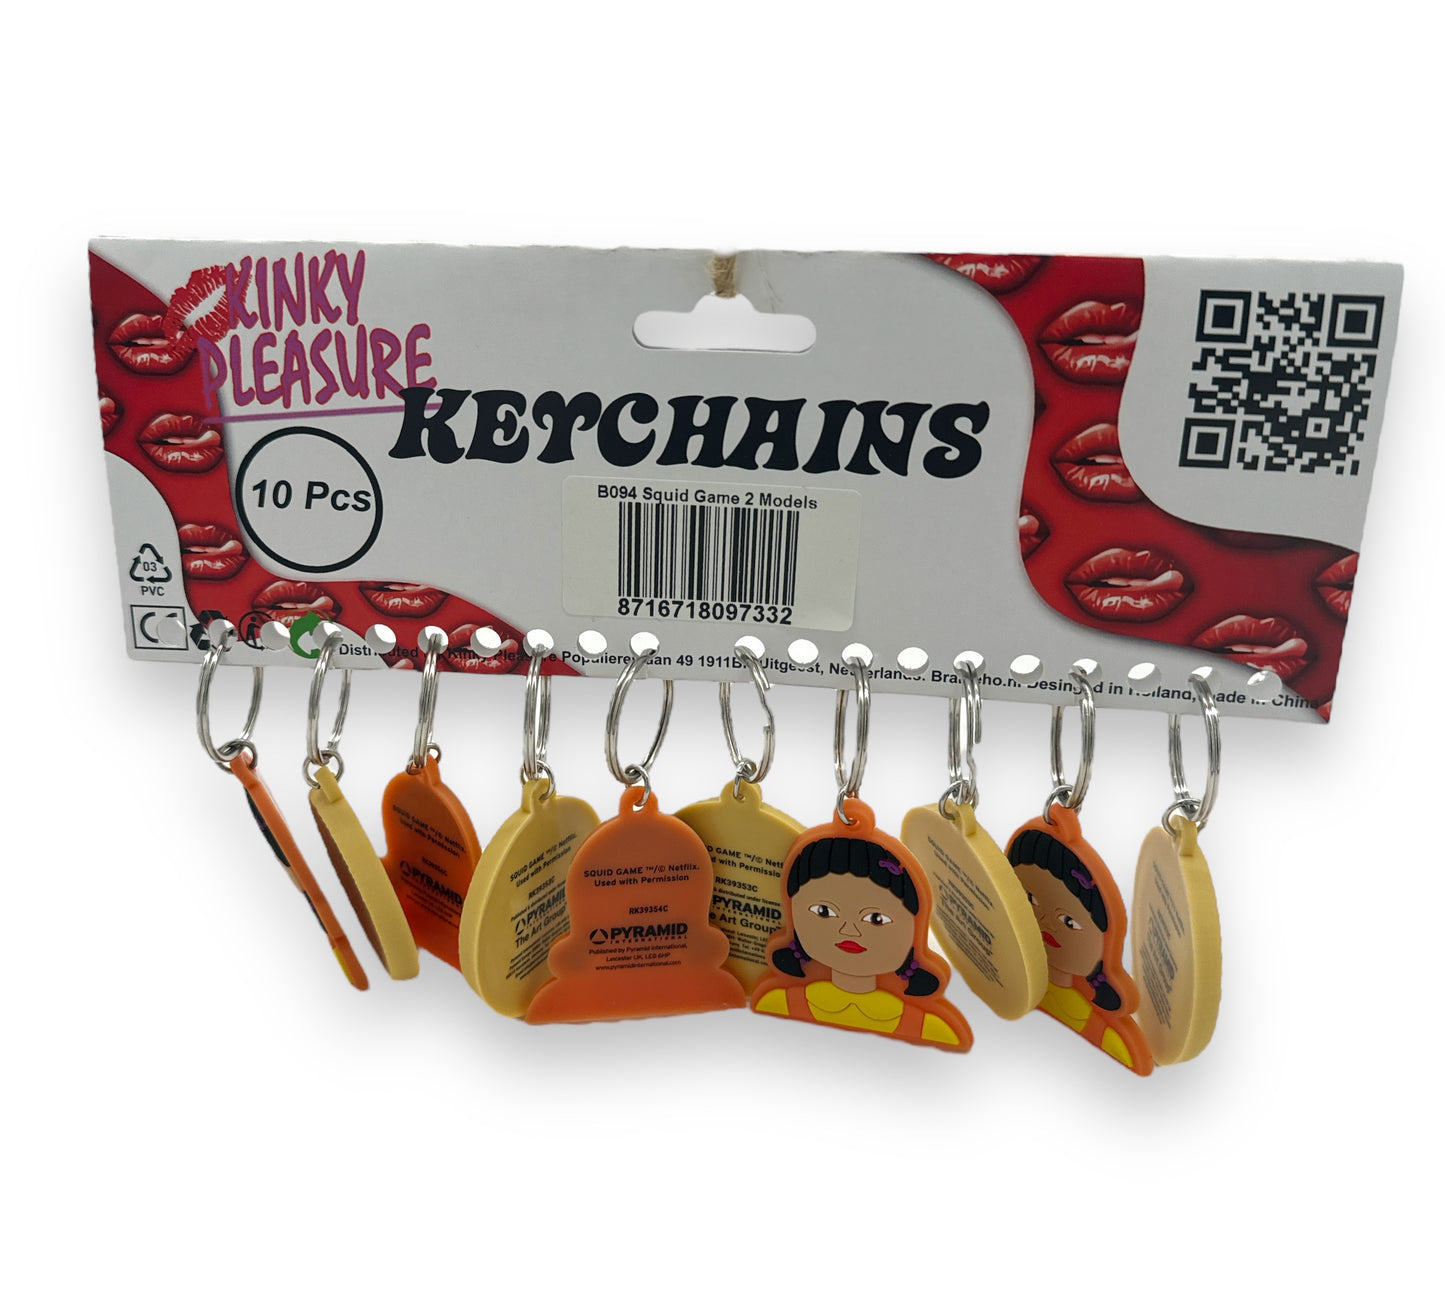 Kinky Pleasure - B095 - Keychain Squidgame - 2 Models